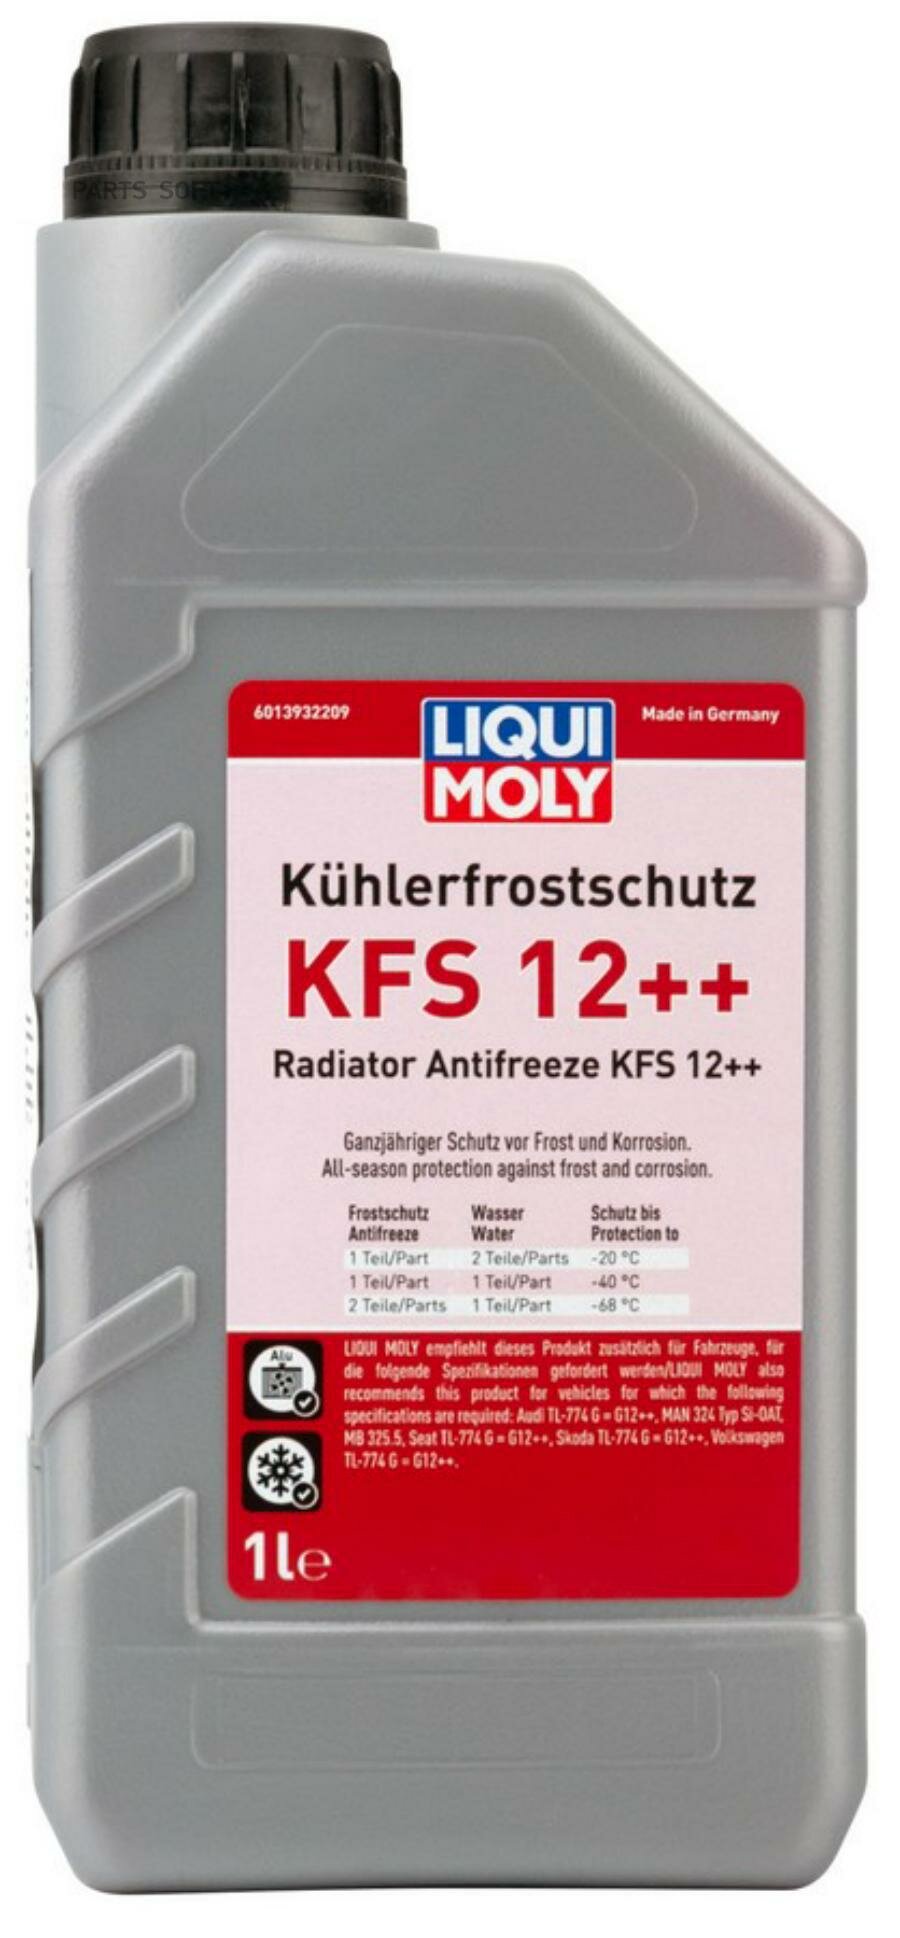 LIQUI MOLY 21134 LiquiMoly Kuhlerfrostschutz KFS 12++ (1L)_антифриз! красн. конц.\VW TL-774 G (G12++), MB 325.5